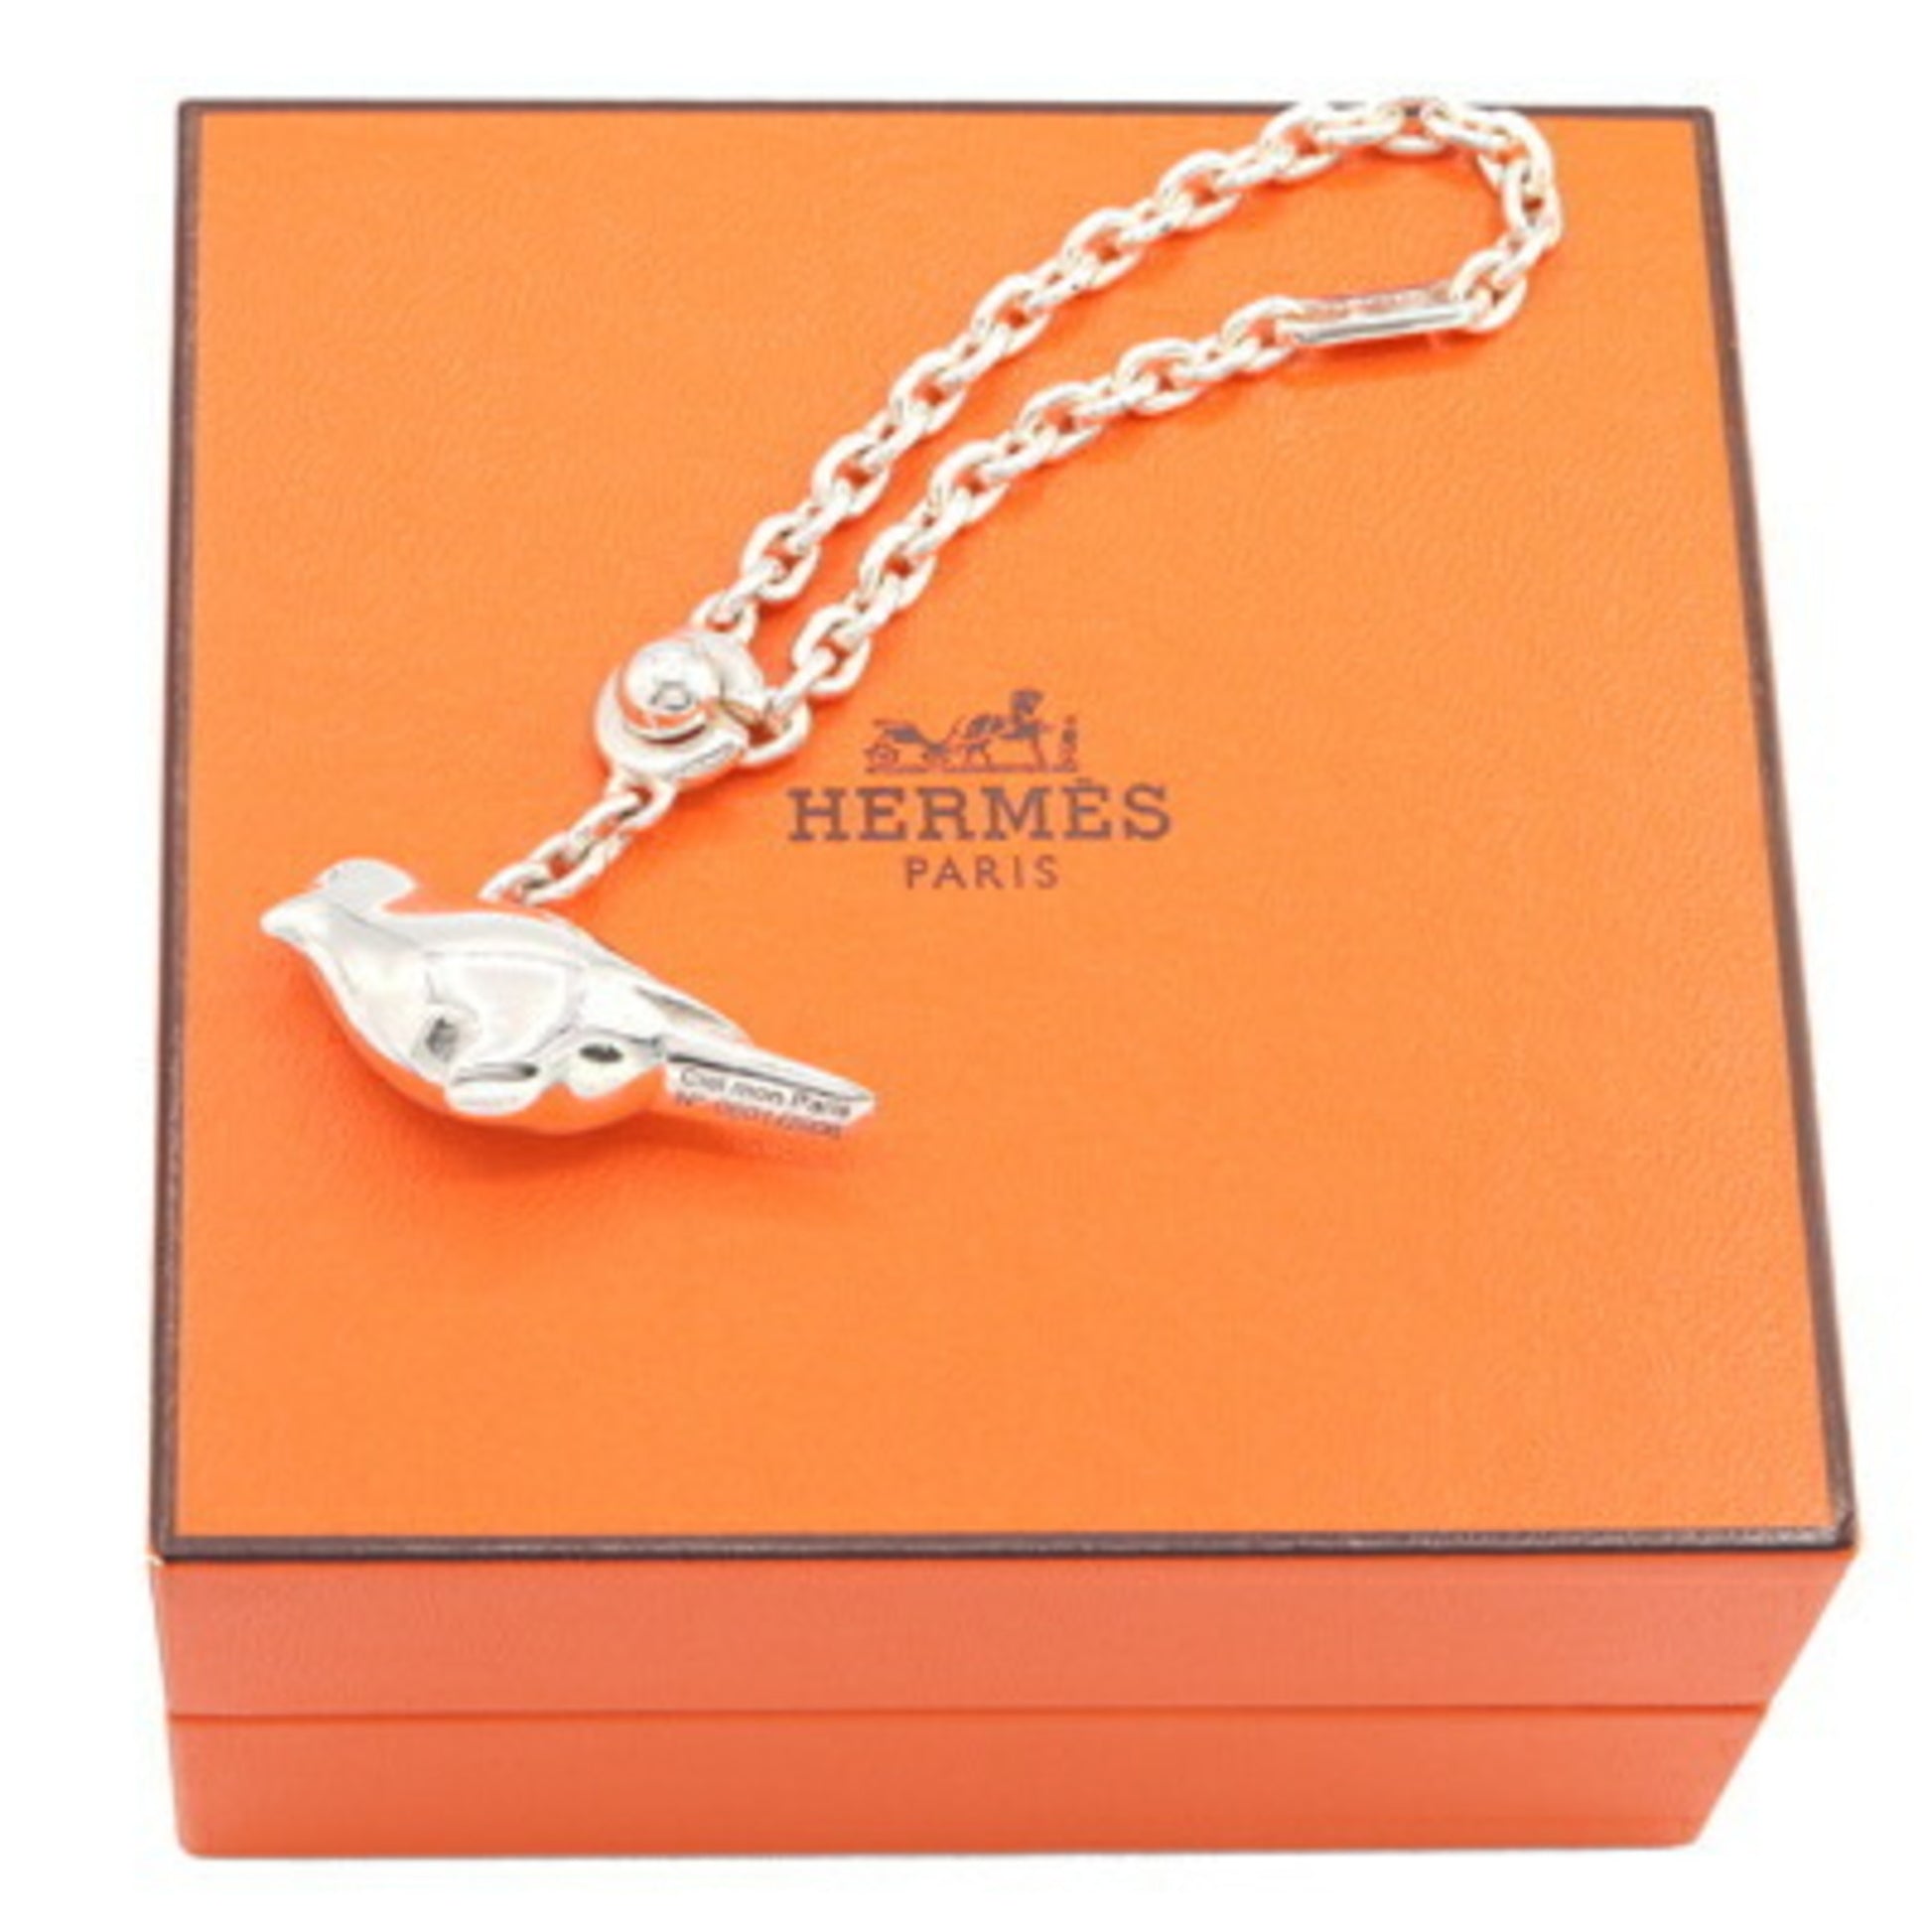 Hermes bag charm bird motif SV sterling silver 925 key holder ring